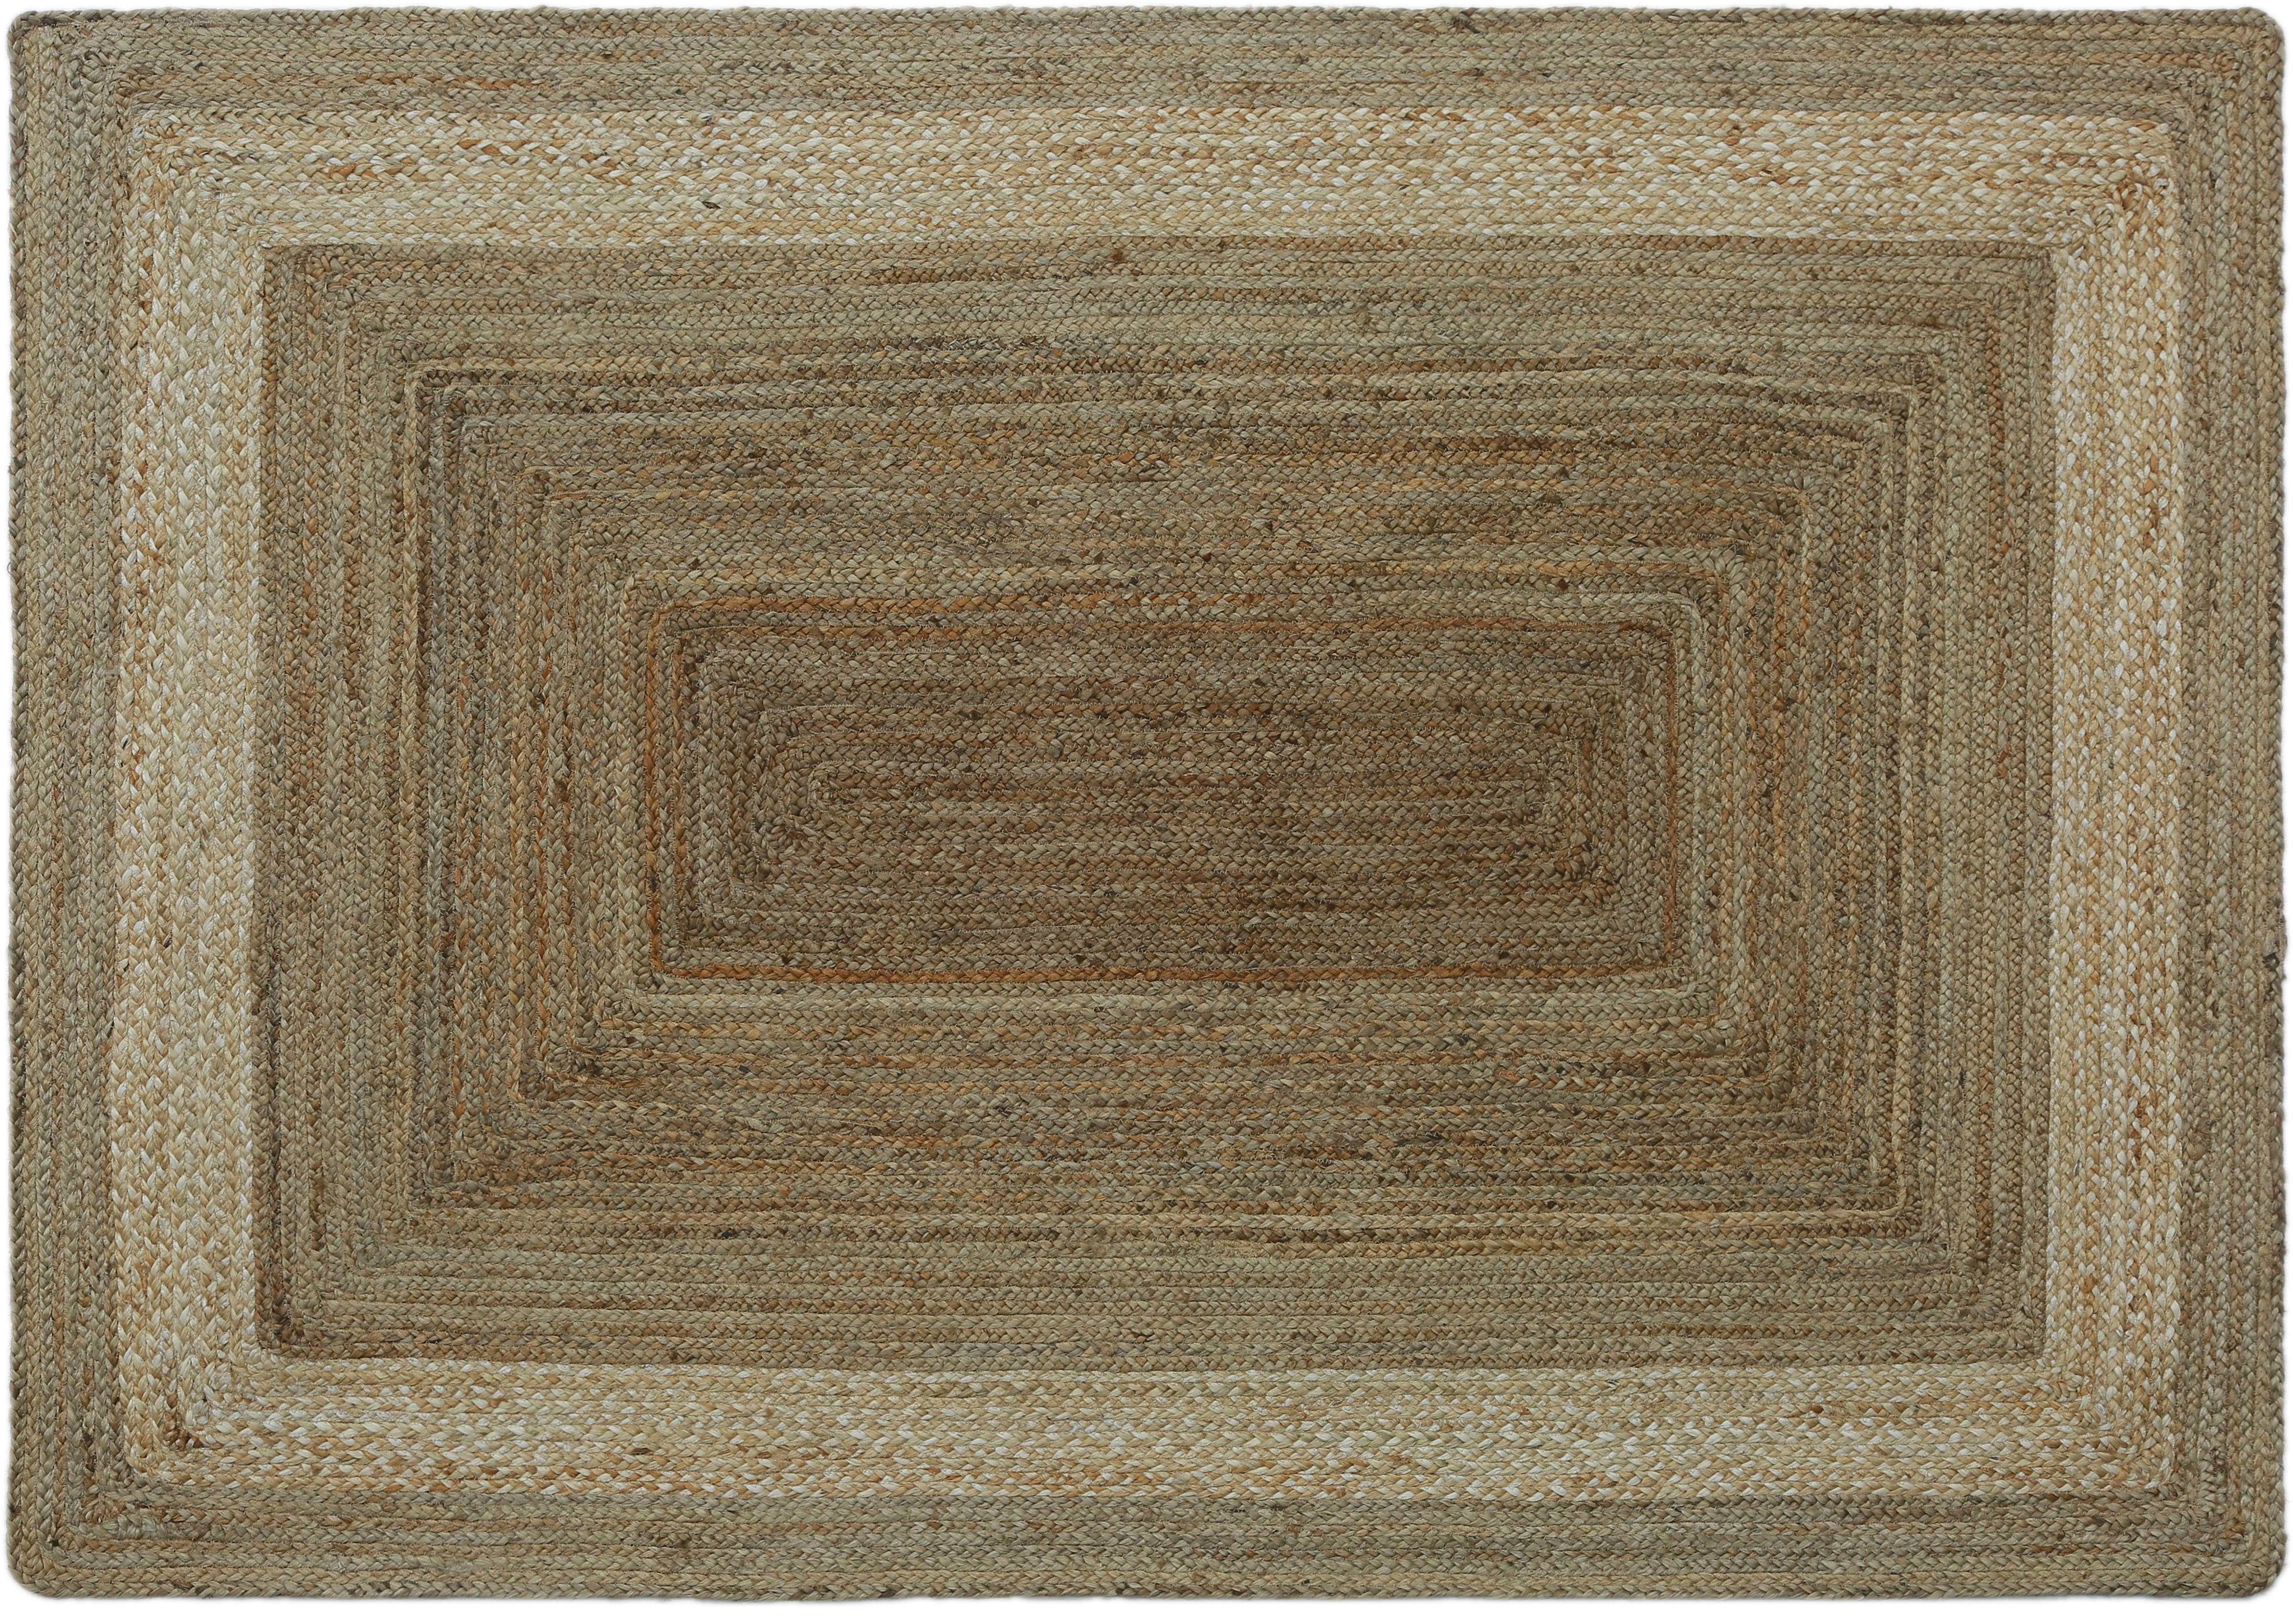 Teppich »Jannis«, my home, rechteckig, Höhe 10 mm, handgewebt, Naturprodukt aus 100% Jute, Wohnzimmer-HomeTrends